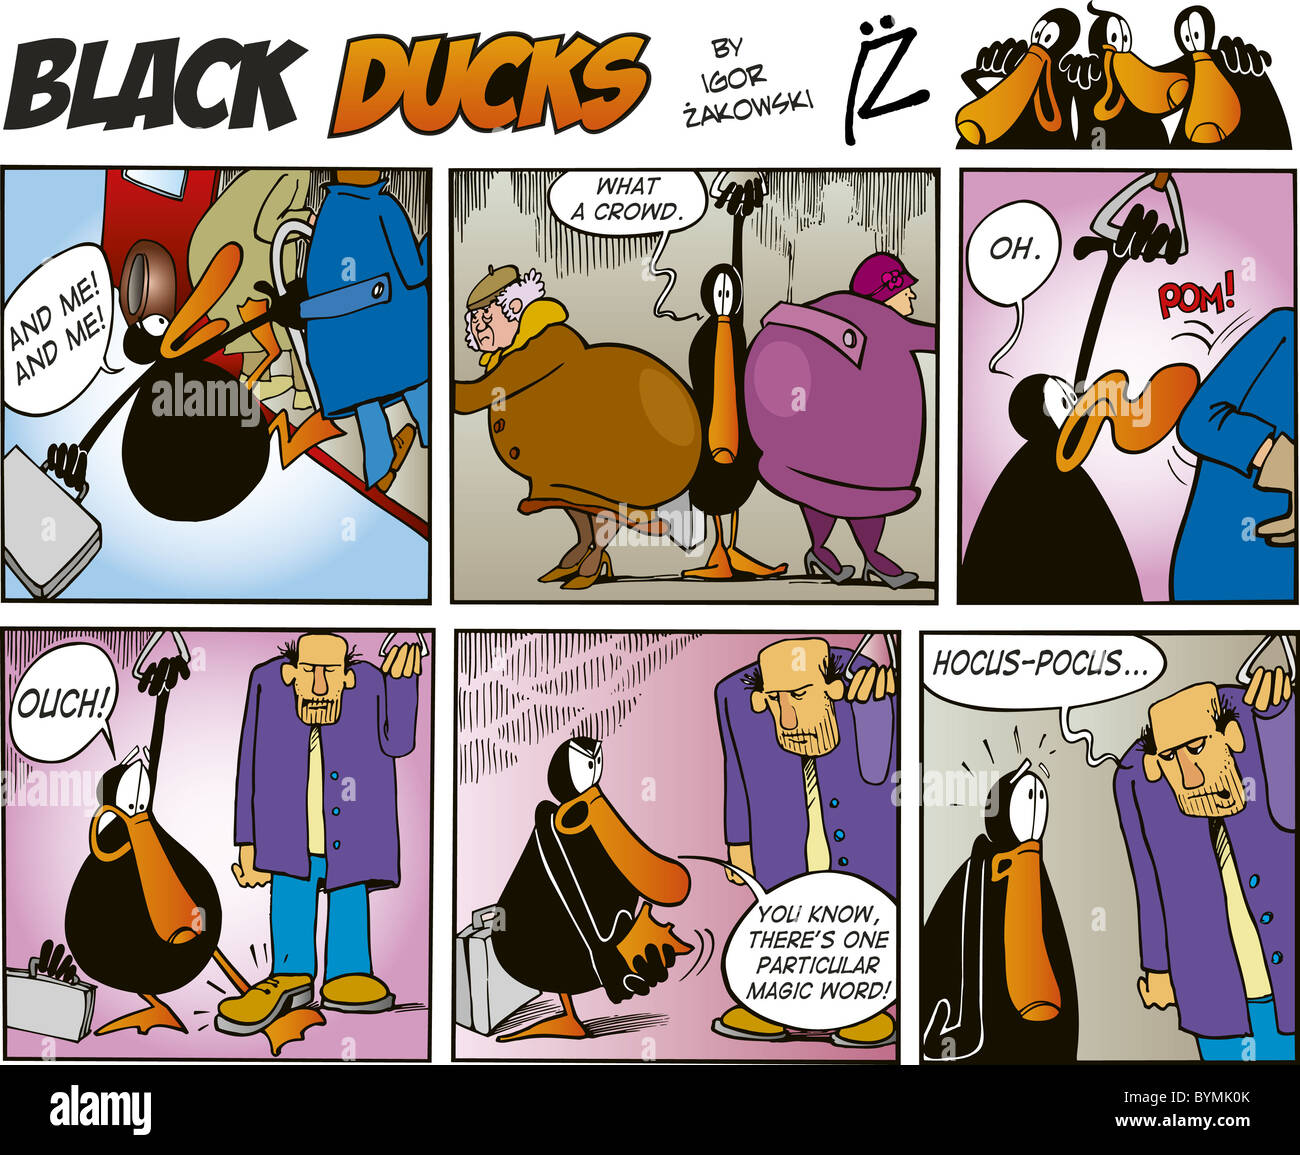 Black Ducks Comic Strip episode 5 Stock Photo